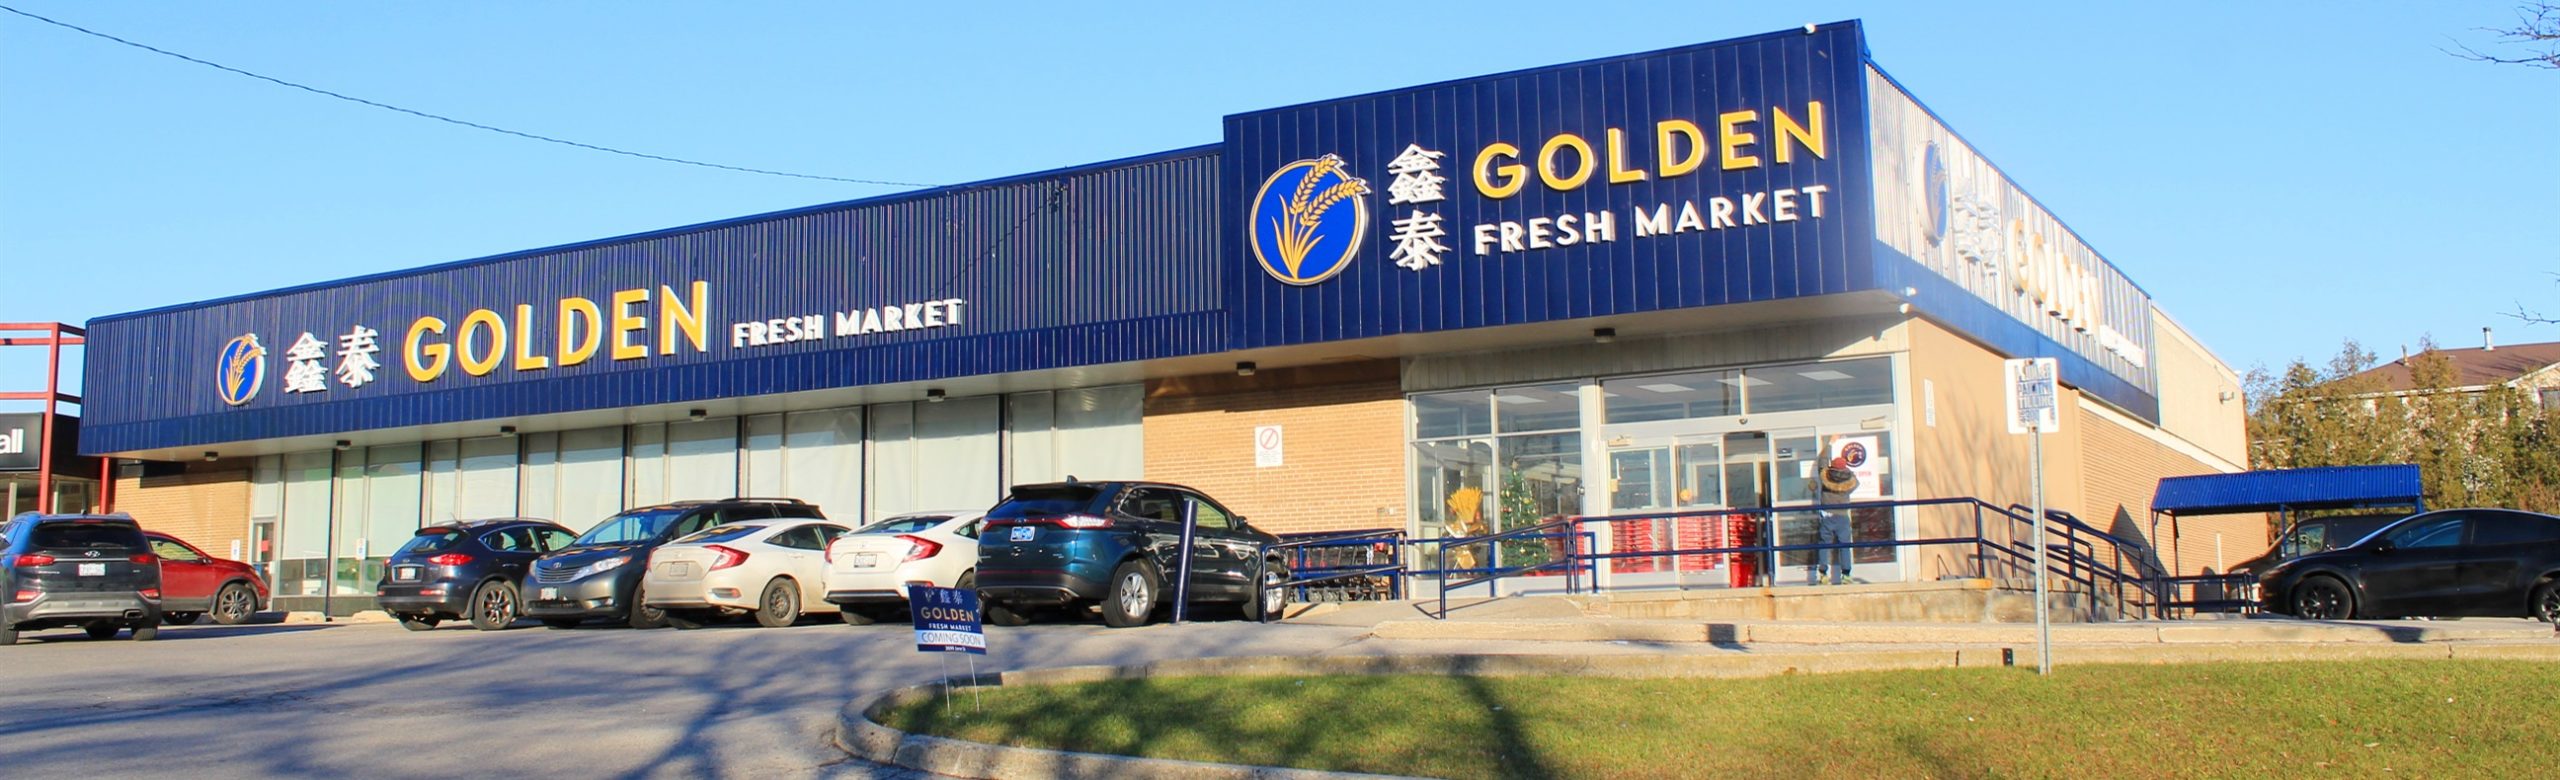 Golden Fresh Market - Grocery